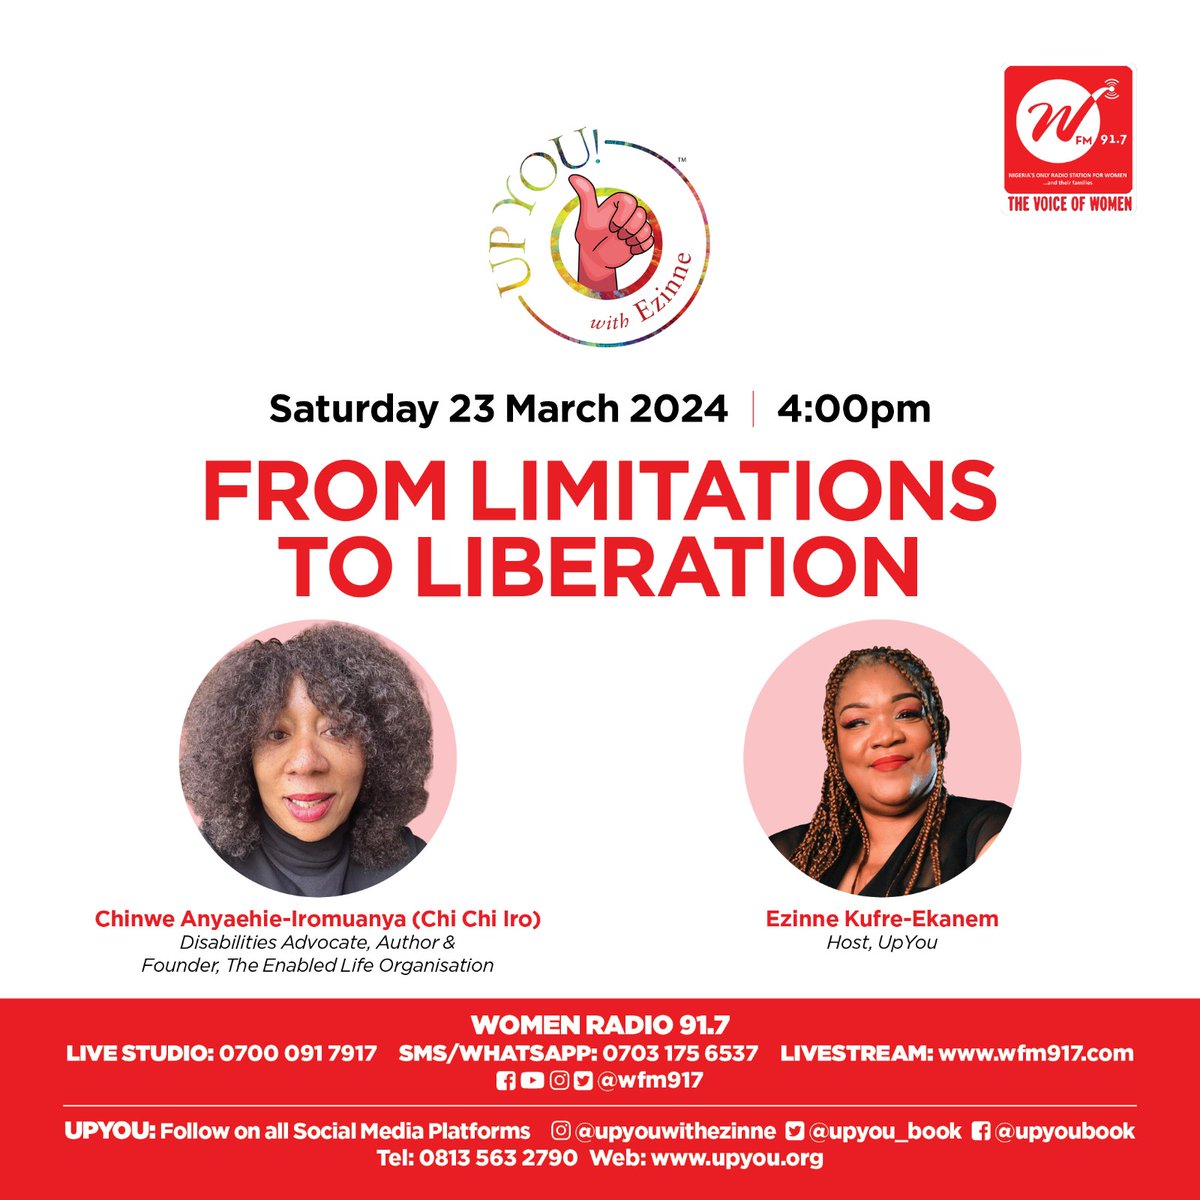 Join Ezienne Kufre-Ekanem and Chinwe Anyaehie-Iromuanya for @upyouwithezinne today at 4pm! Live stream: 0700 091 7917 Sms: 0703 175 6537 Livestream: wfm917.com